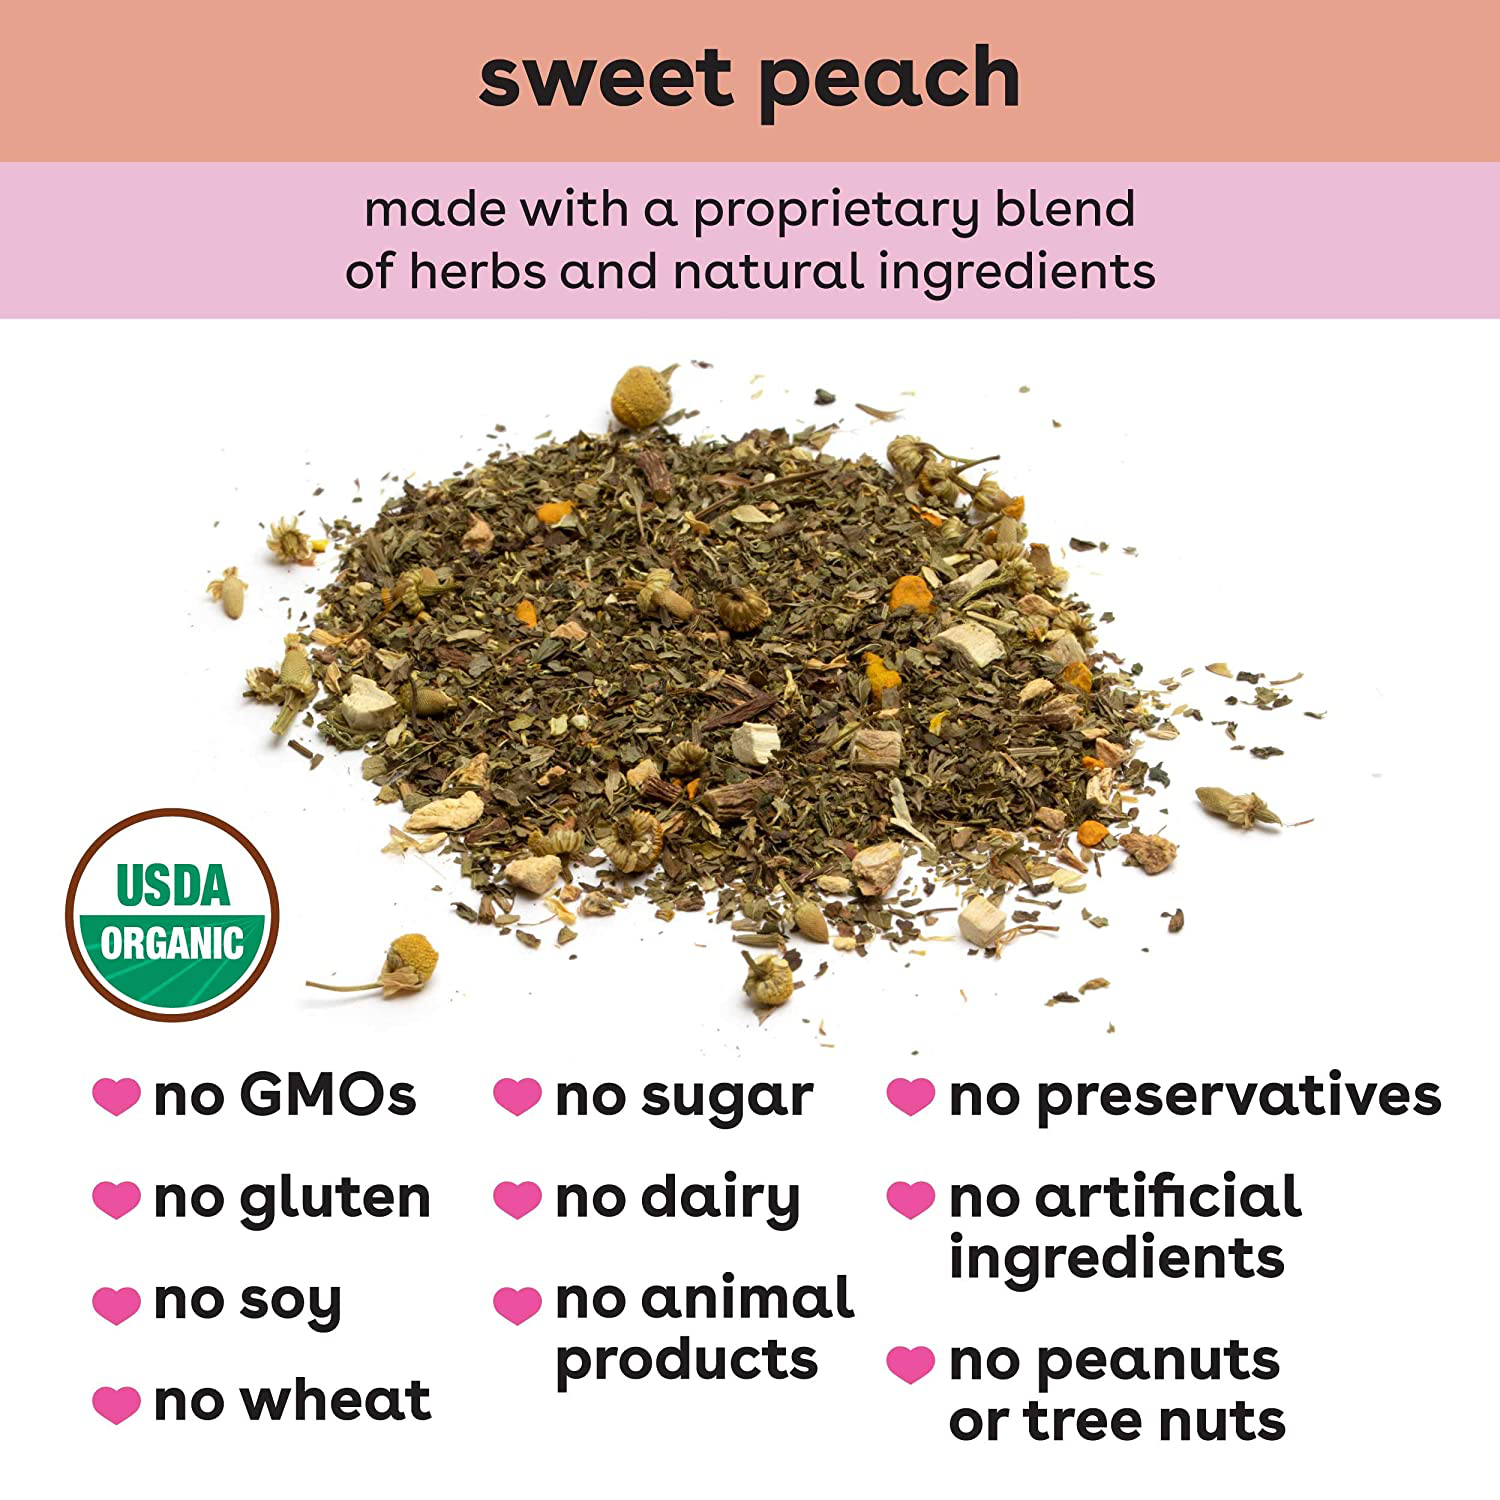 Bamboobies Pregnancy Tea for Nursing Support | 10 Tea Bags | Sweet Peach | Soothes Heartburn | Organic, Non GMO, Caffeine Free, & Sugar Free | Breastfeeding Supplement | Herbal Tea